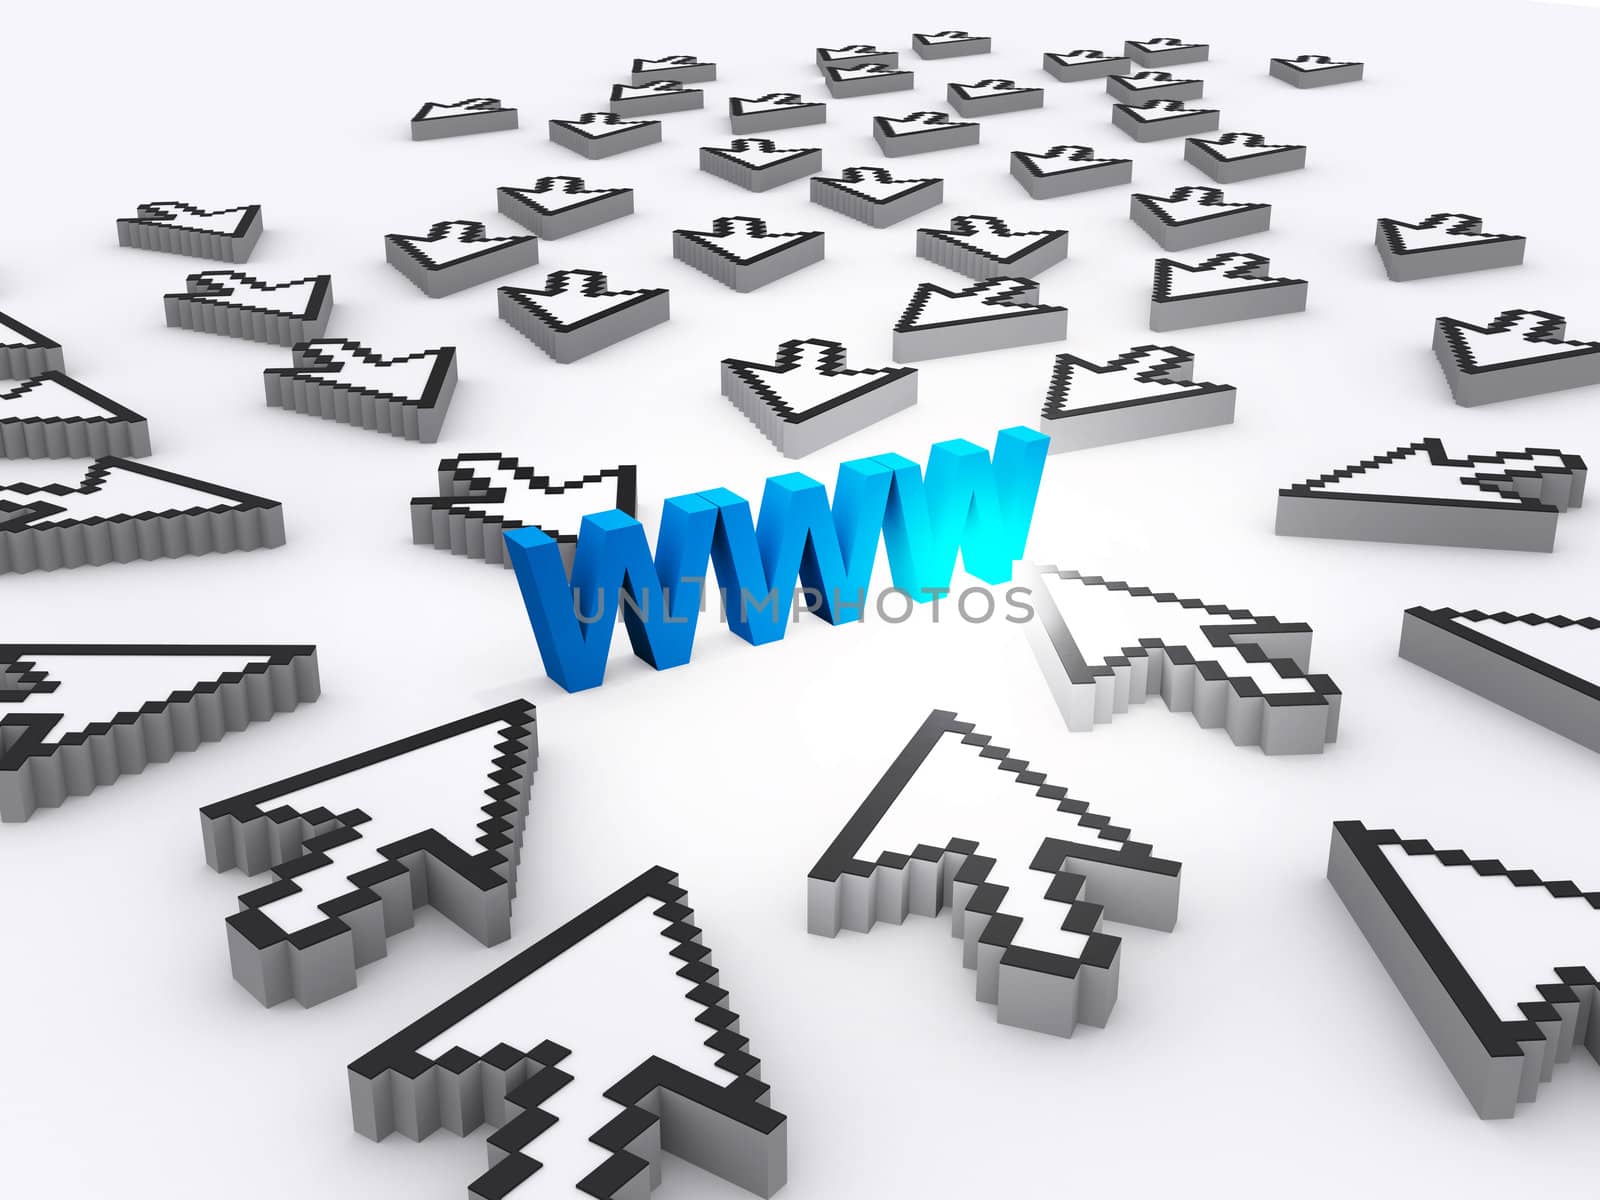 internet world wide web concept